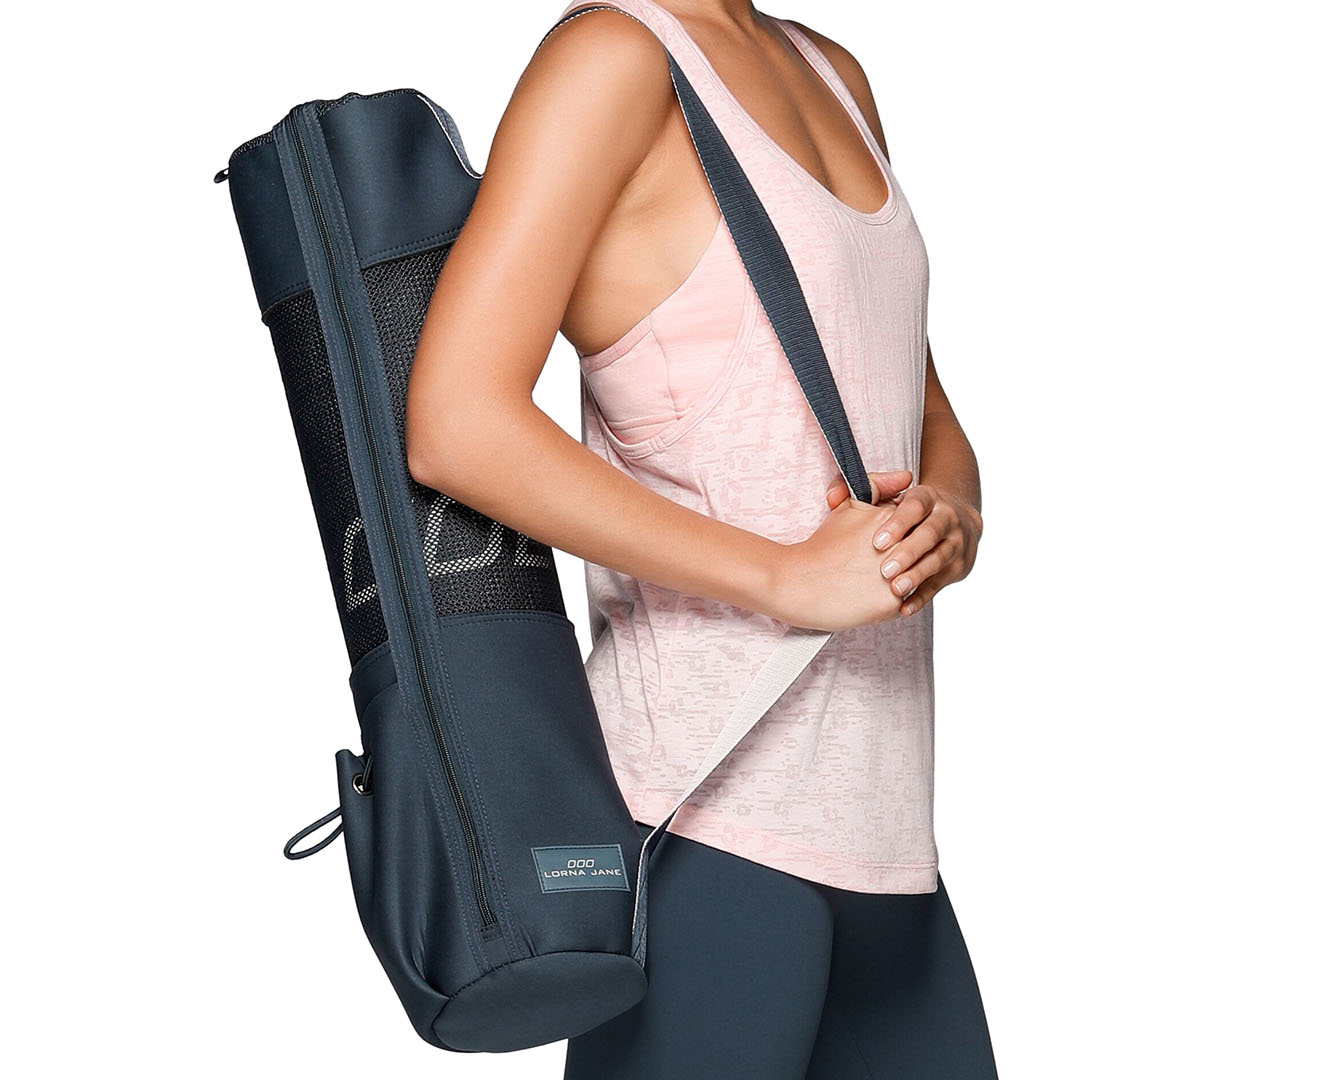 Fremous Yoga Mat Bag,Full-Zip Exercise Yoga Mat Carry Bag For Women And Men